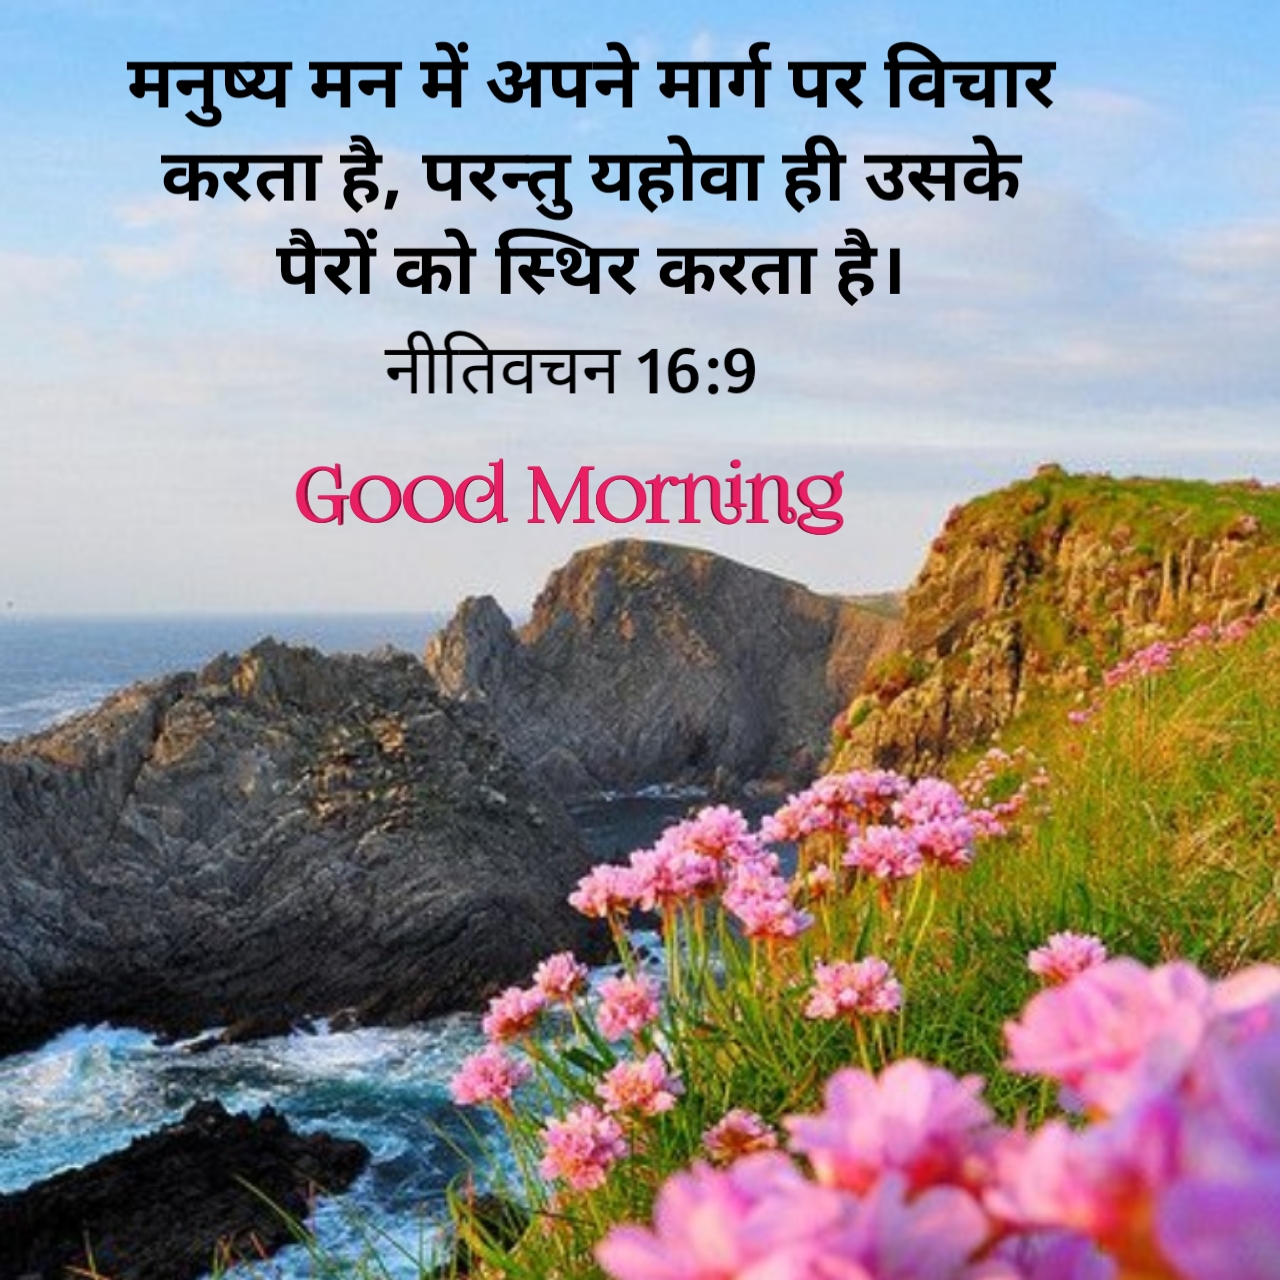 Good morning bible verse quotes images in hindi - Click Bible